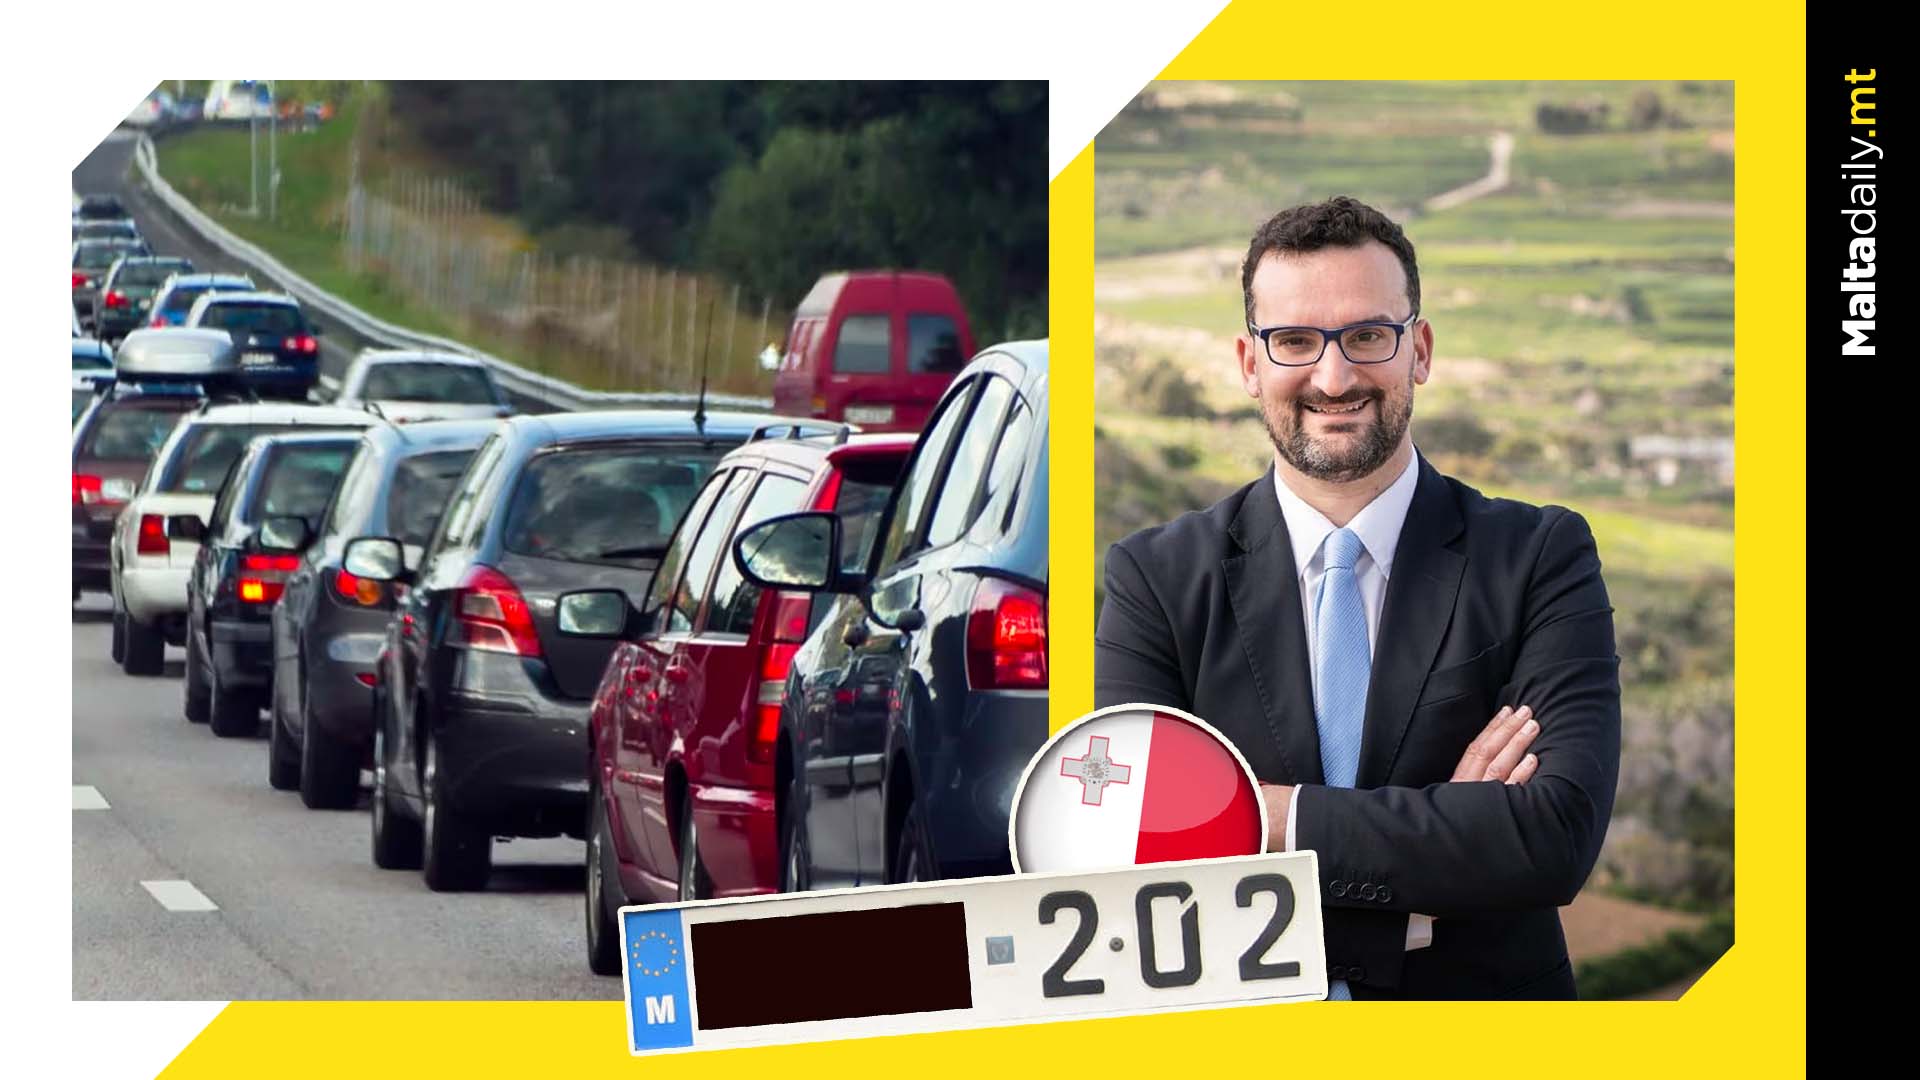 Xagħra mayor suggests odd-even car plate traffic solution